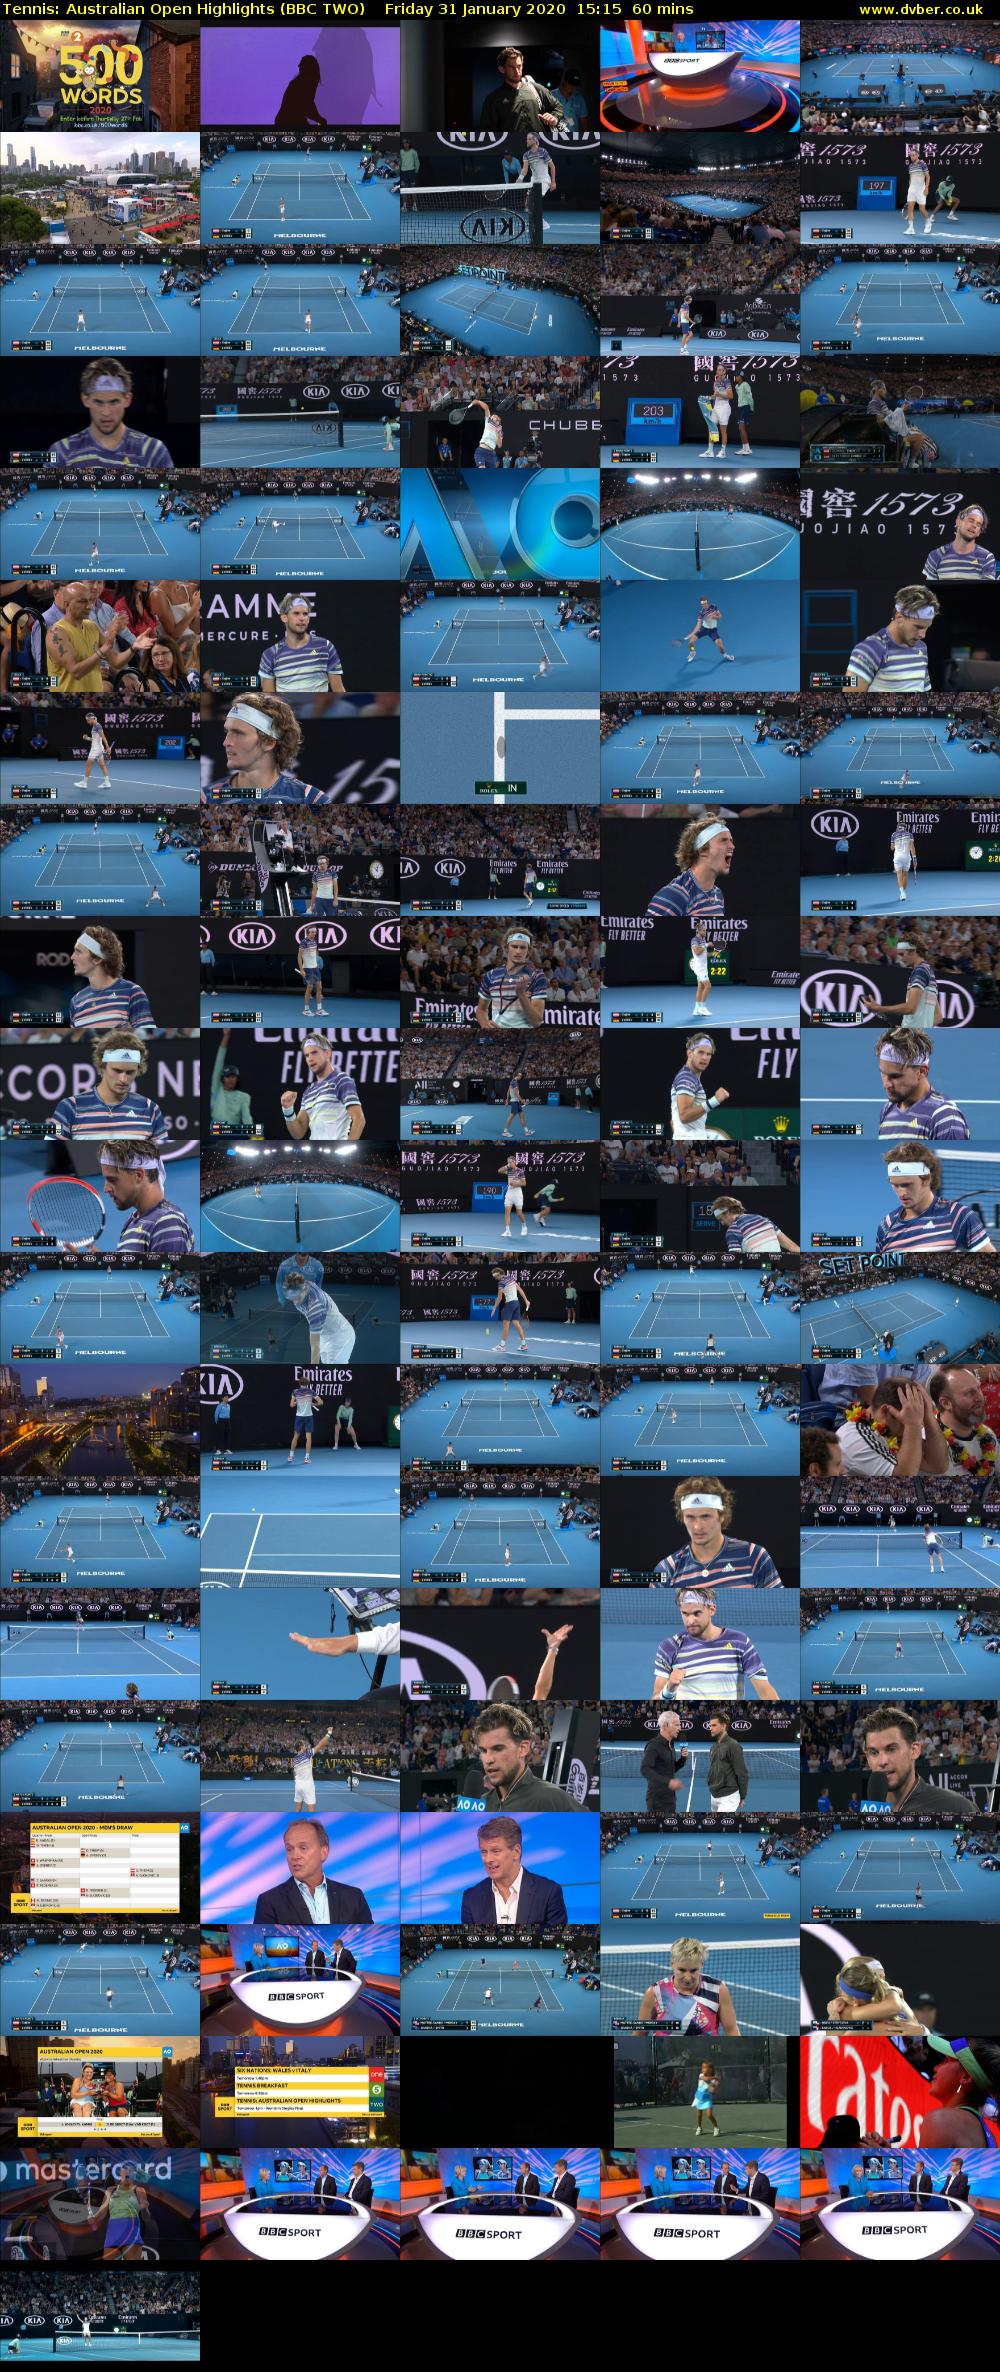 Tennis: Australian Open Highlights (BBC TWO) Friday 31 January 2020 15:15 - 16:15